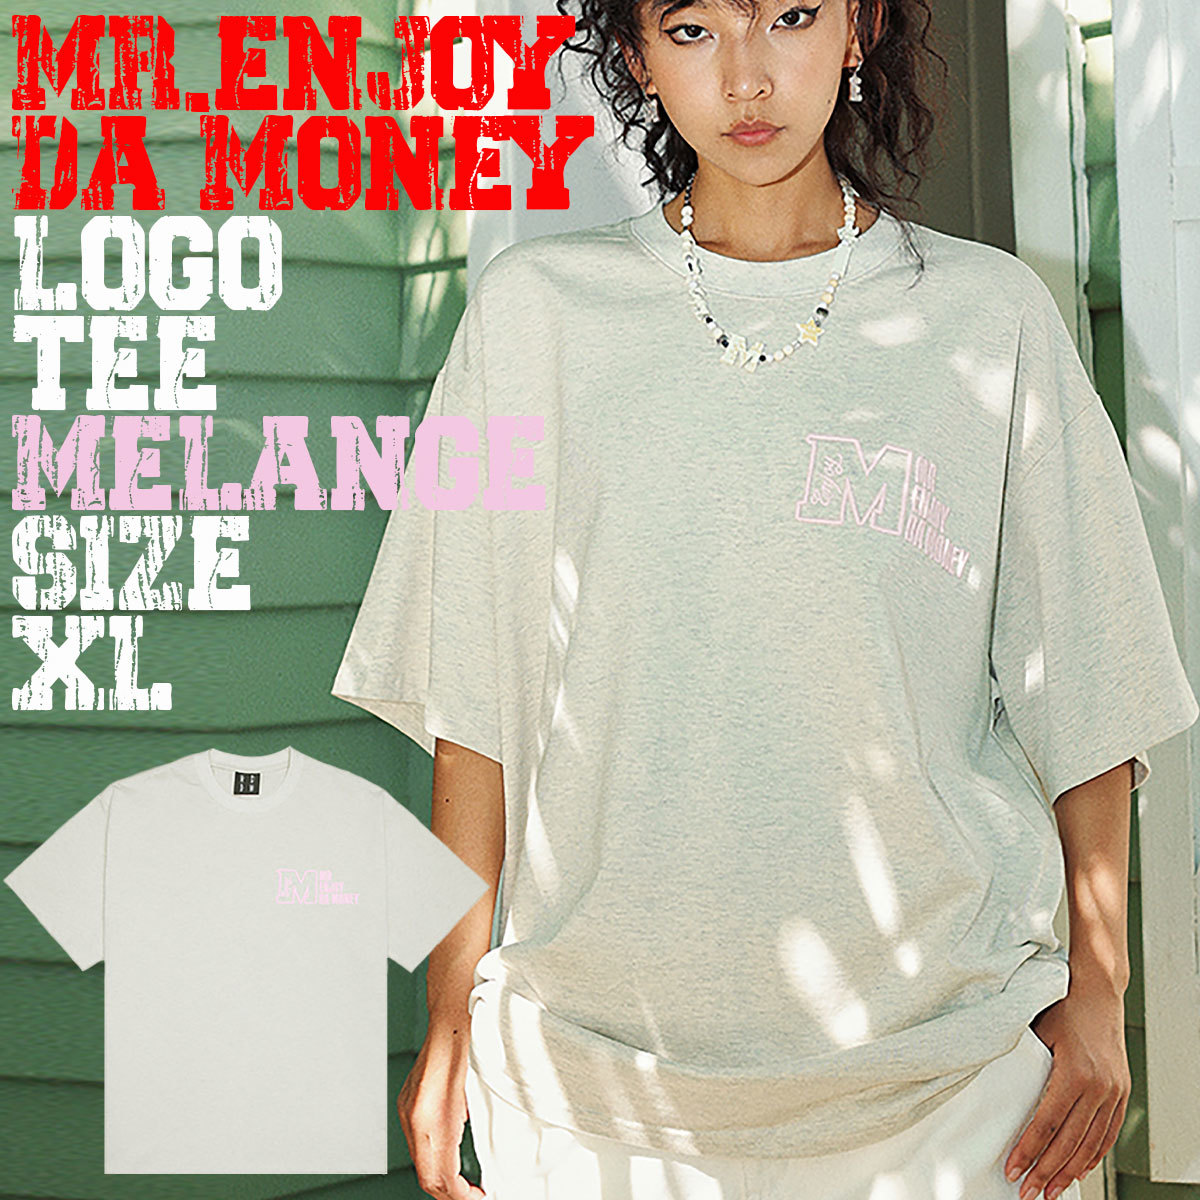 【 MR.ENJOY DA MONEY 】 MEDM 正規品 男女兼用 ユニセックス ビッグサイズ ストリート系 ロゴ 刺繍 Tシャツ LOGO TEE メランジ XL